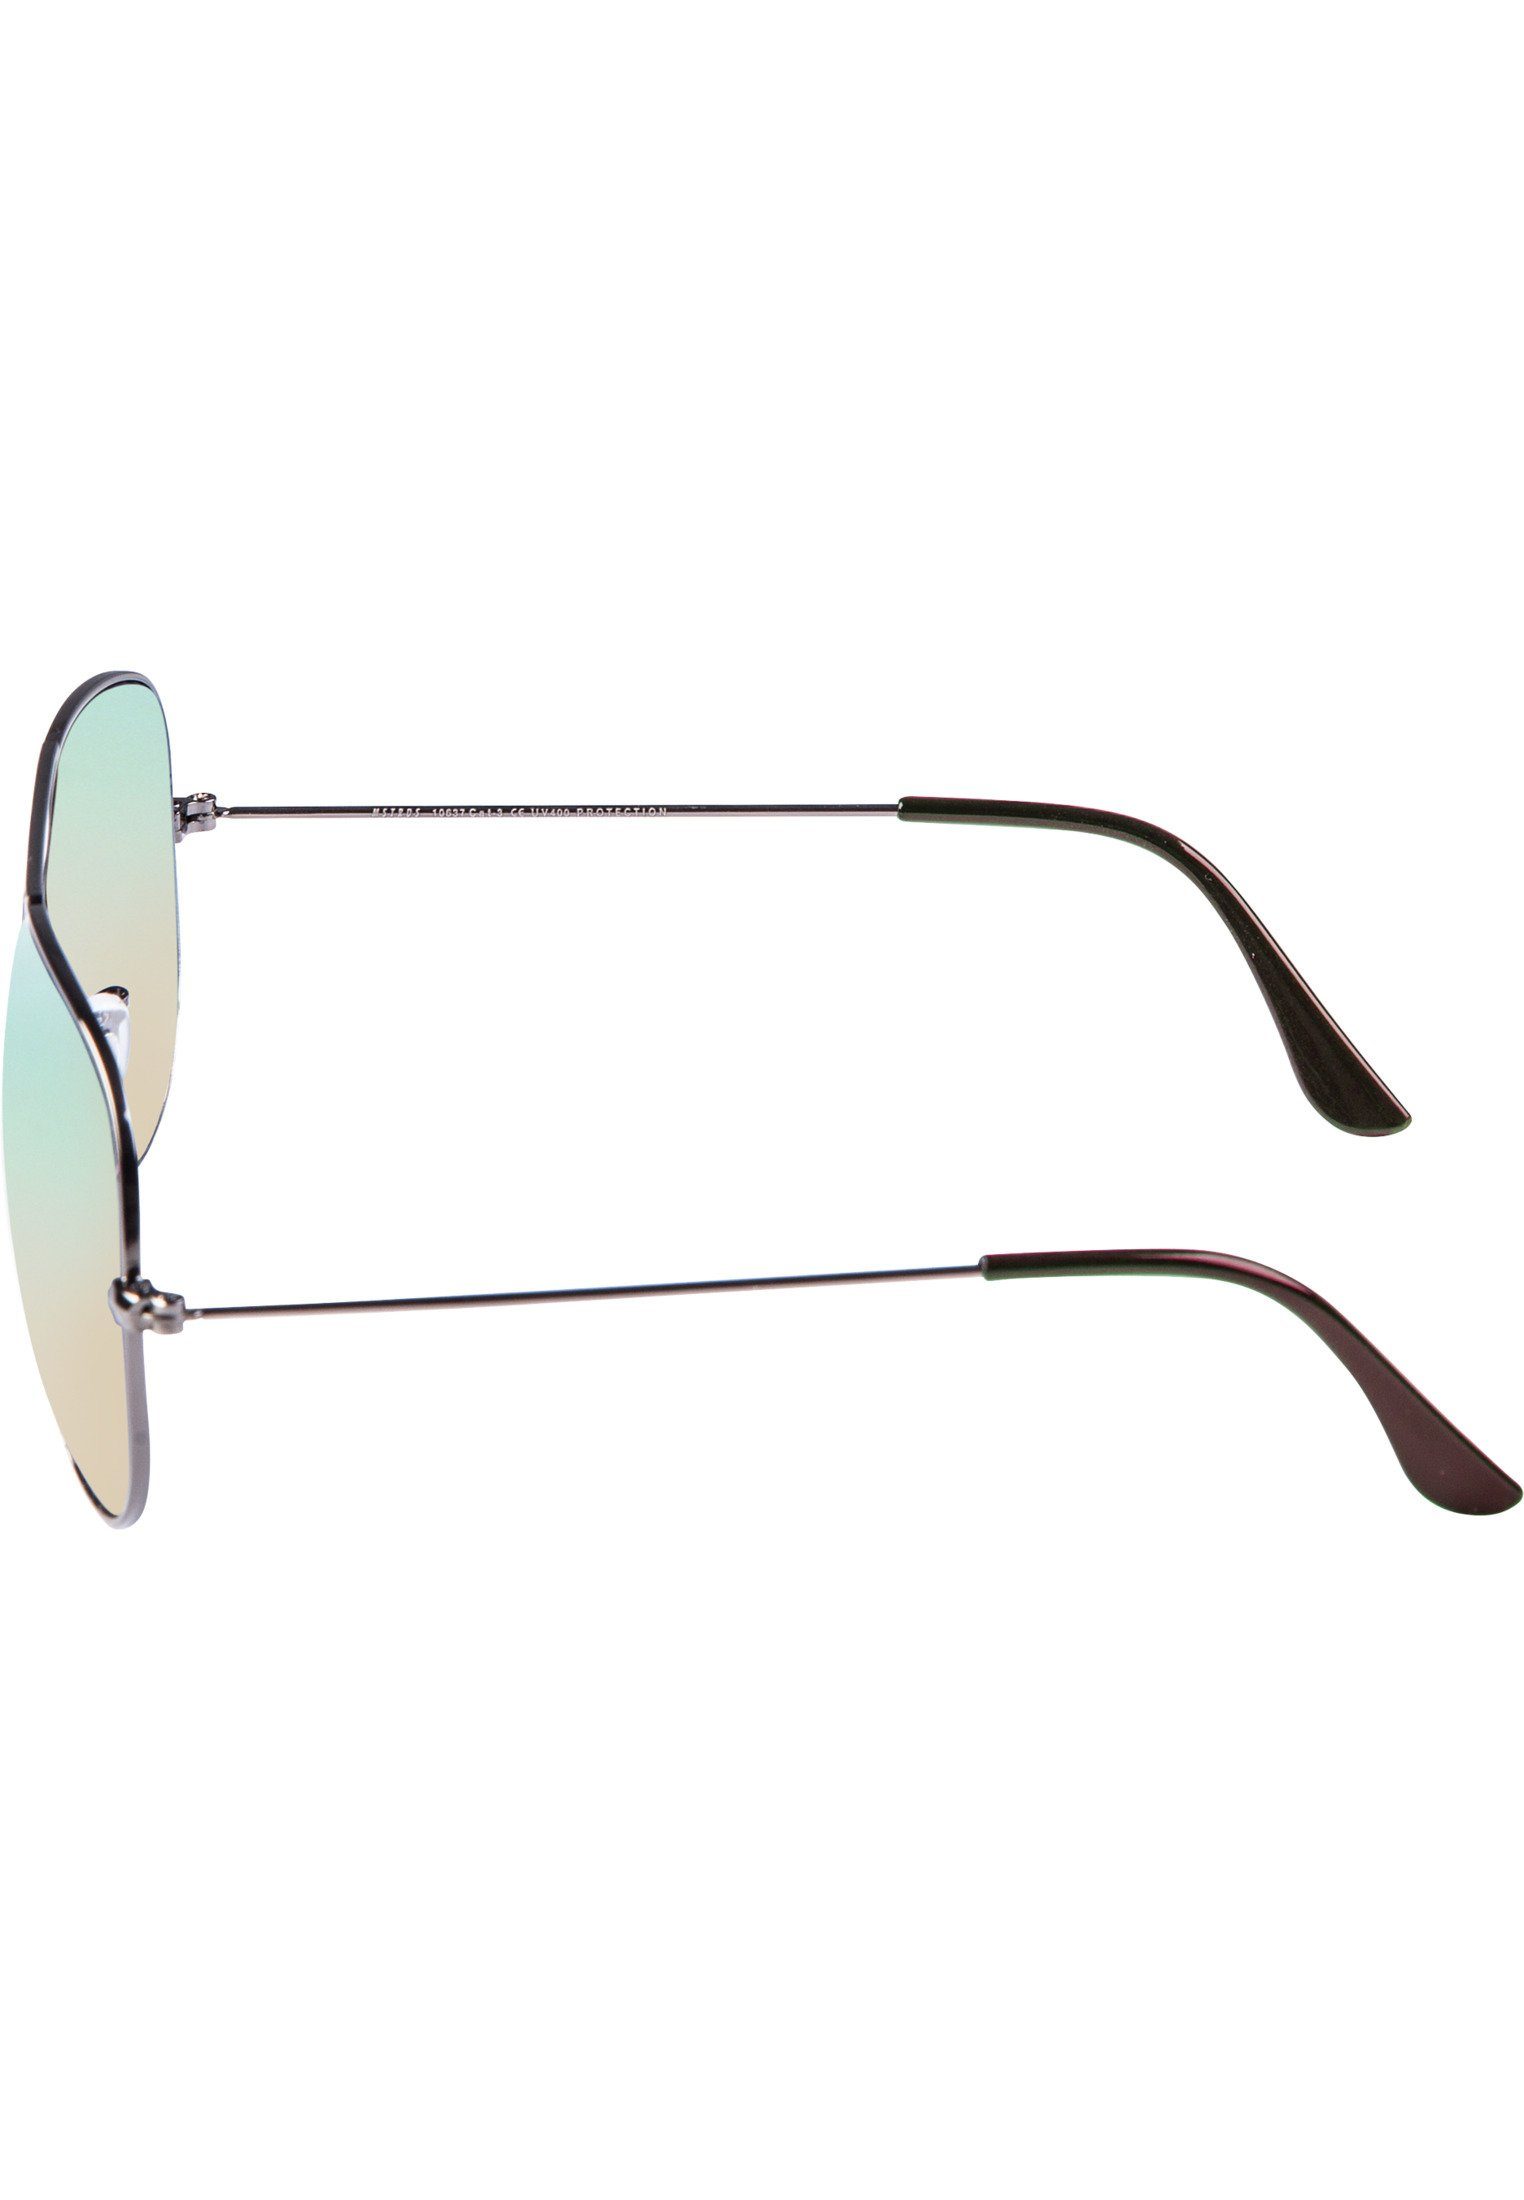 Accessoires PureAv gun/blue MSTRDS Youth Sunglasses Sonnenbrille